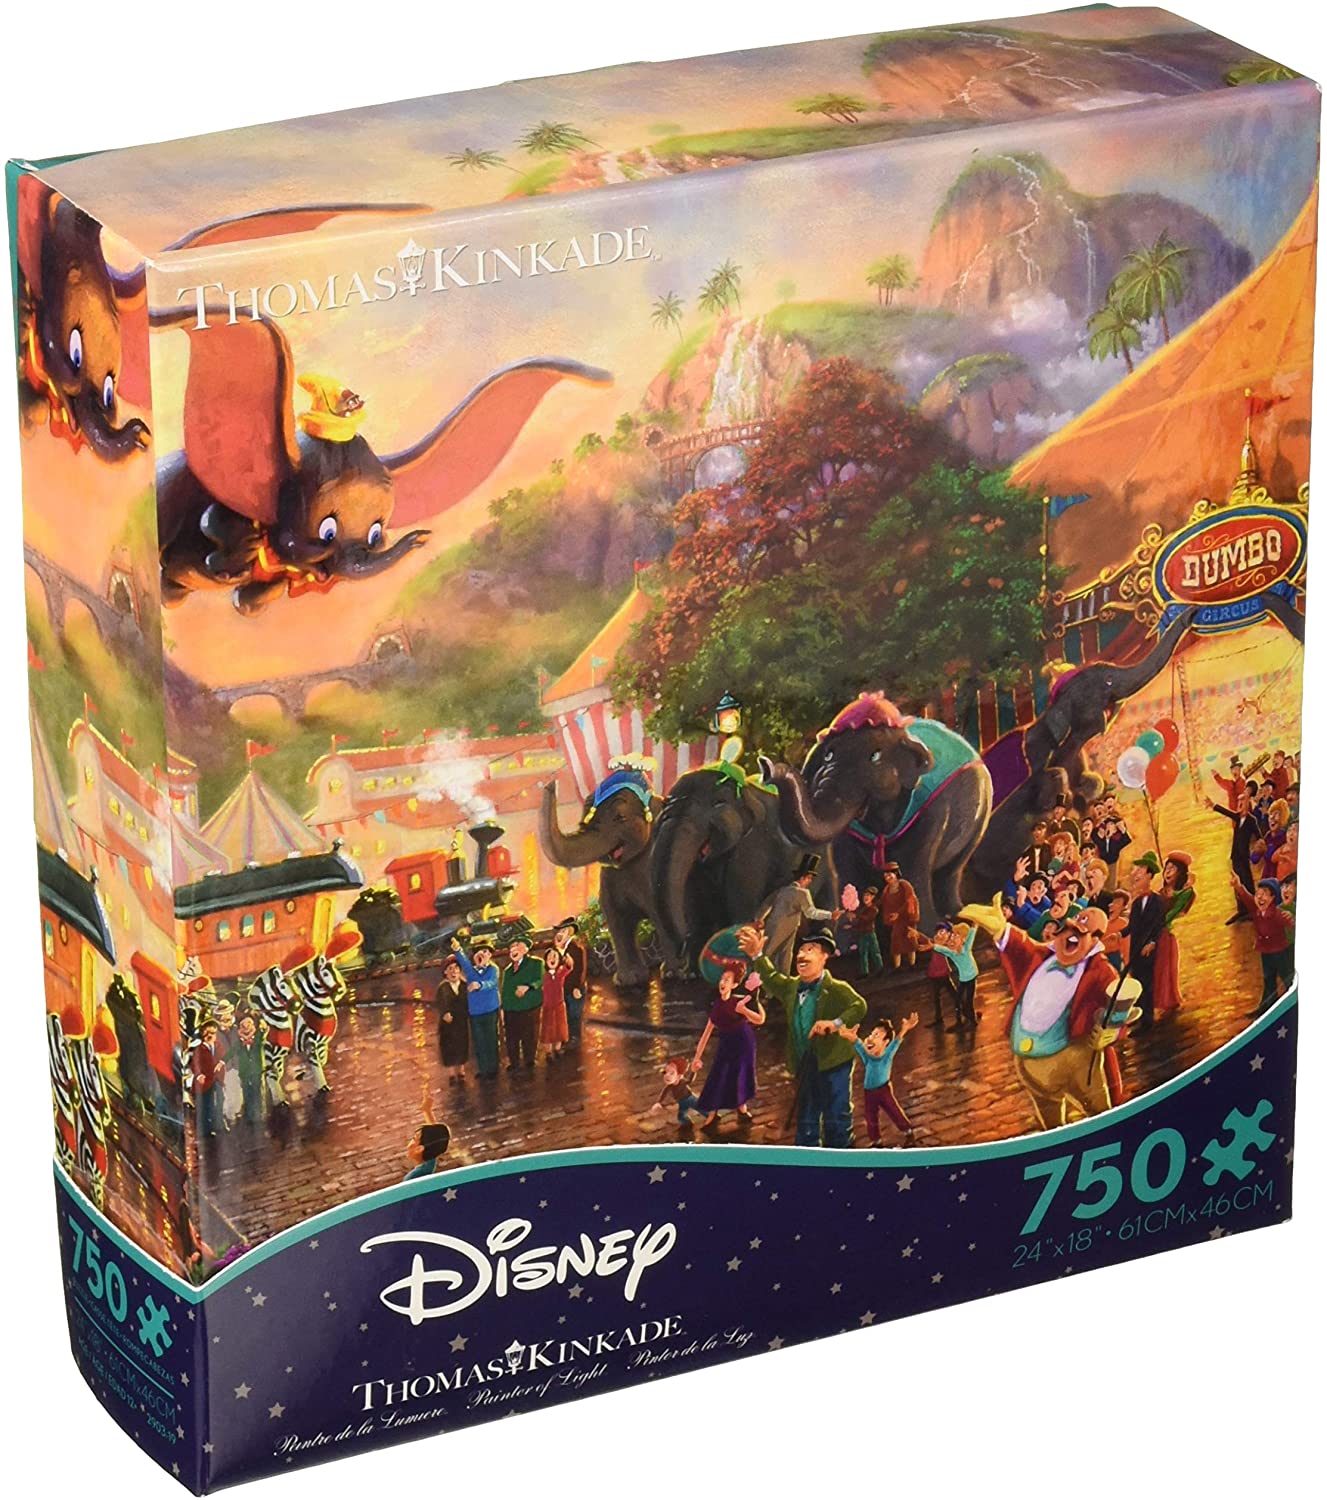 Disney Dumbo Thomas Kinkade Ceaco 750 Piece Jigsaw Puzzle USA